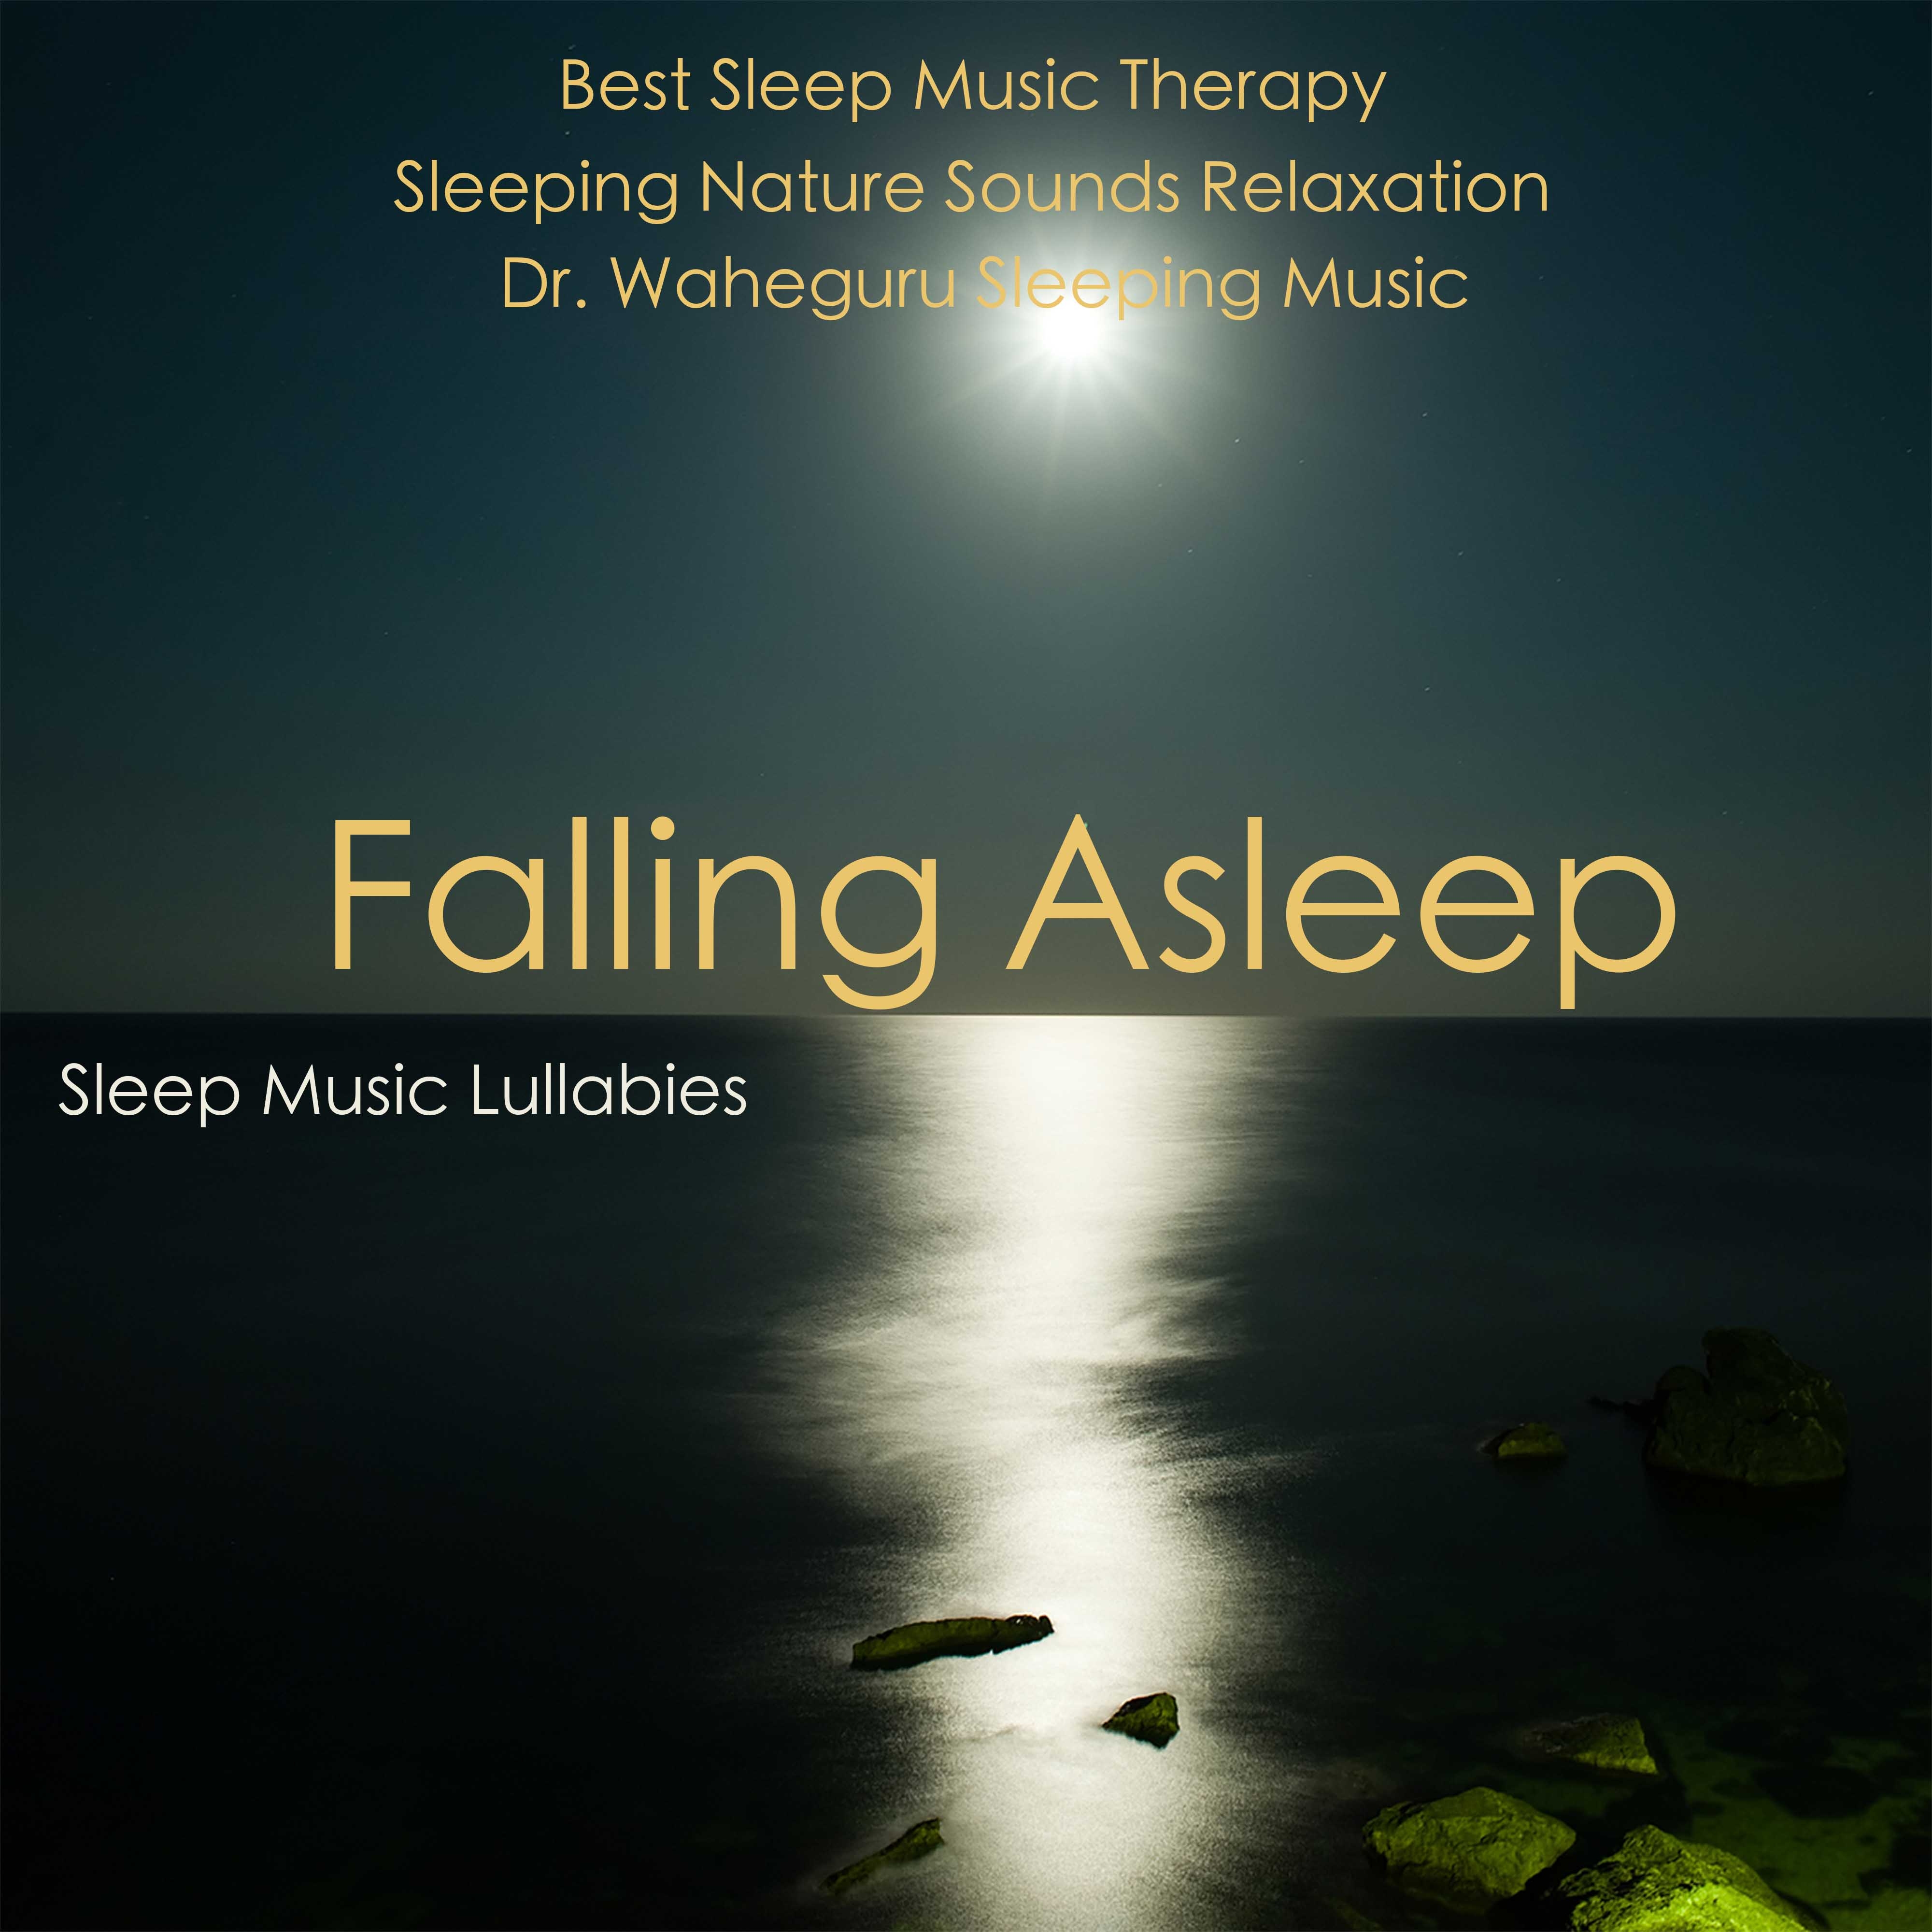 Falling Asleep: Best Sleep Music Therapy - Dr. Waheguru Sleeping Music & Sleeping Nature Sounds Relaxation